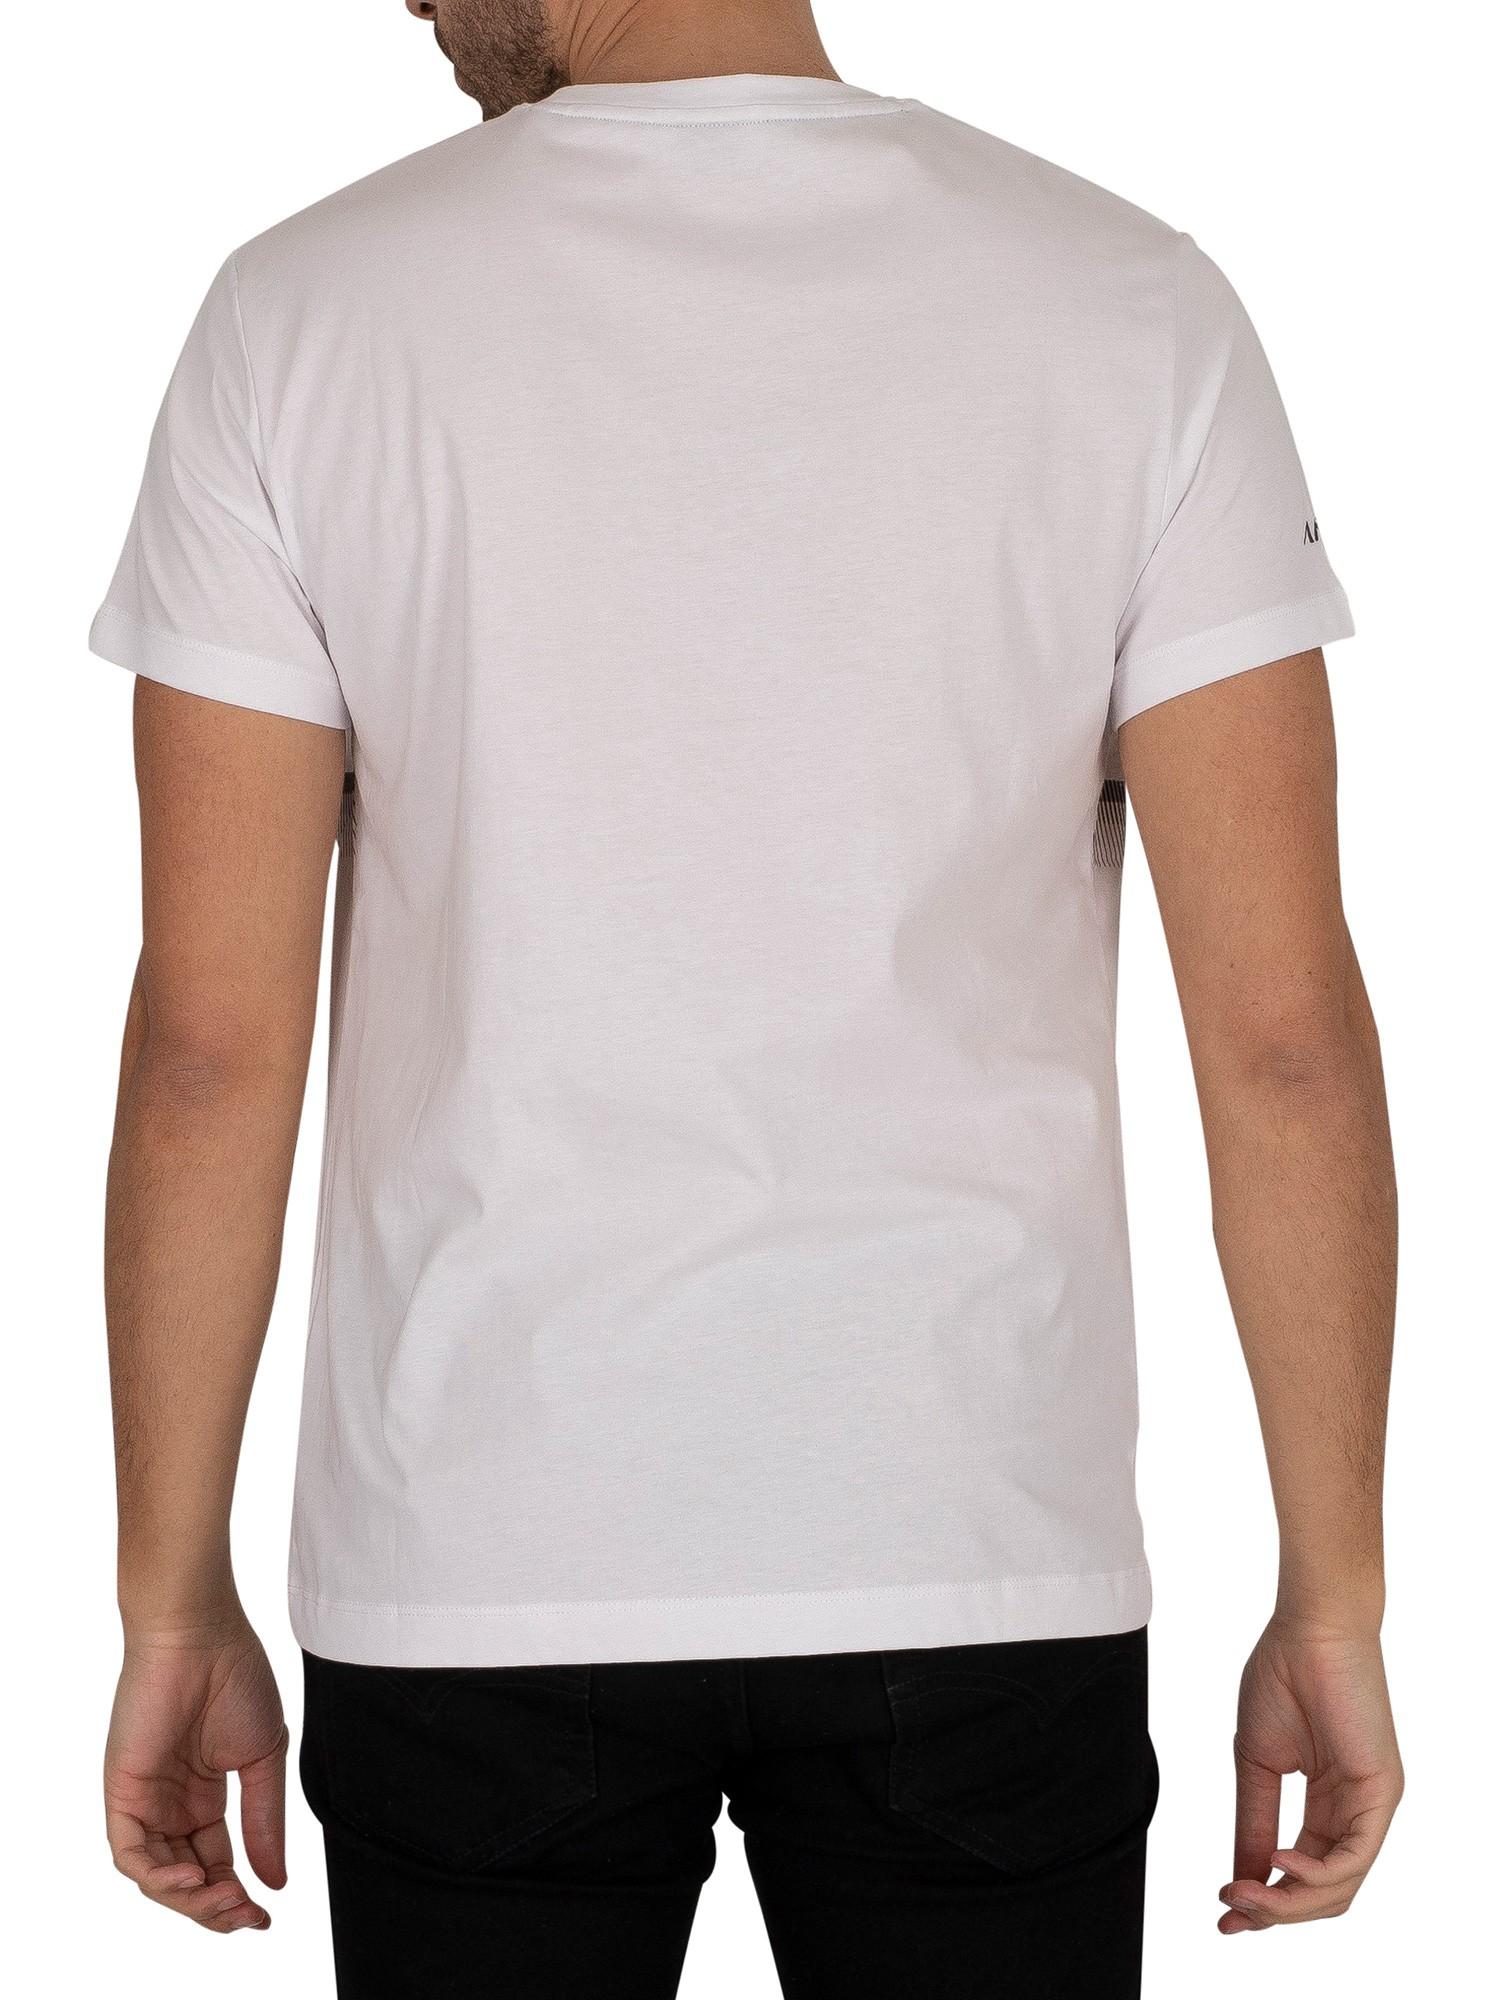 Løb badning Melbourne Hackett Aston Martin Racing Print T-shirt in White for Men | Lyst